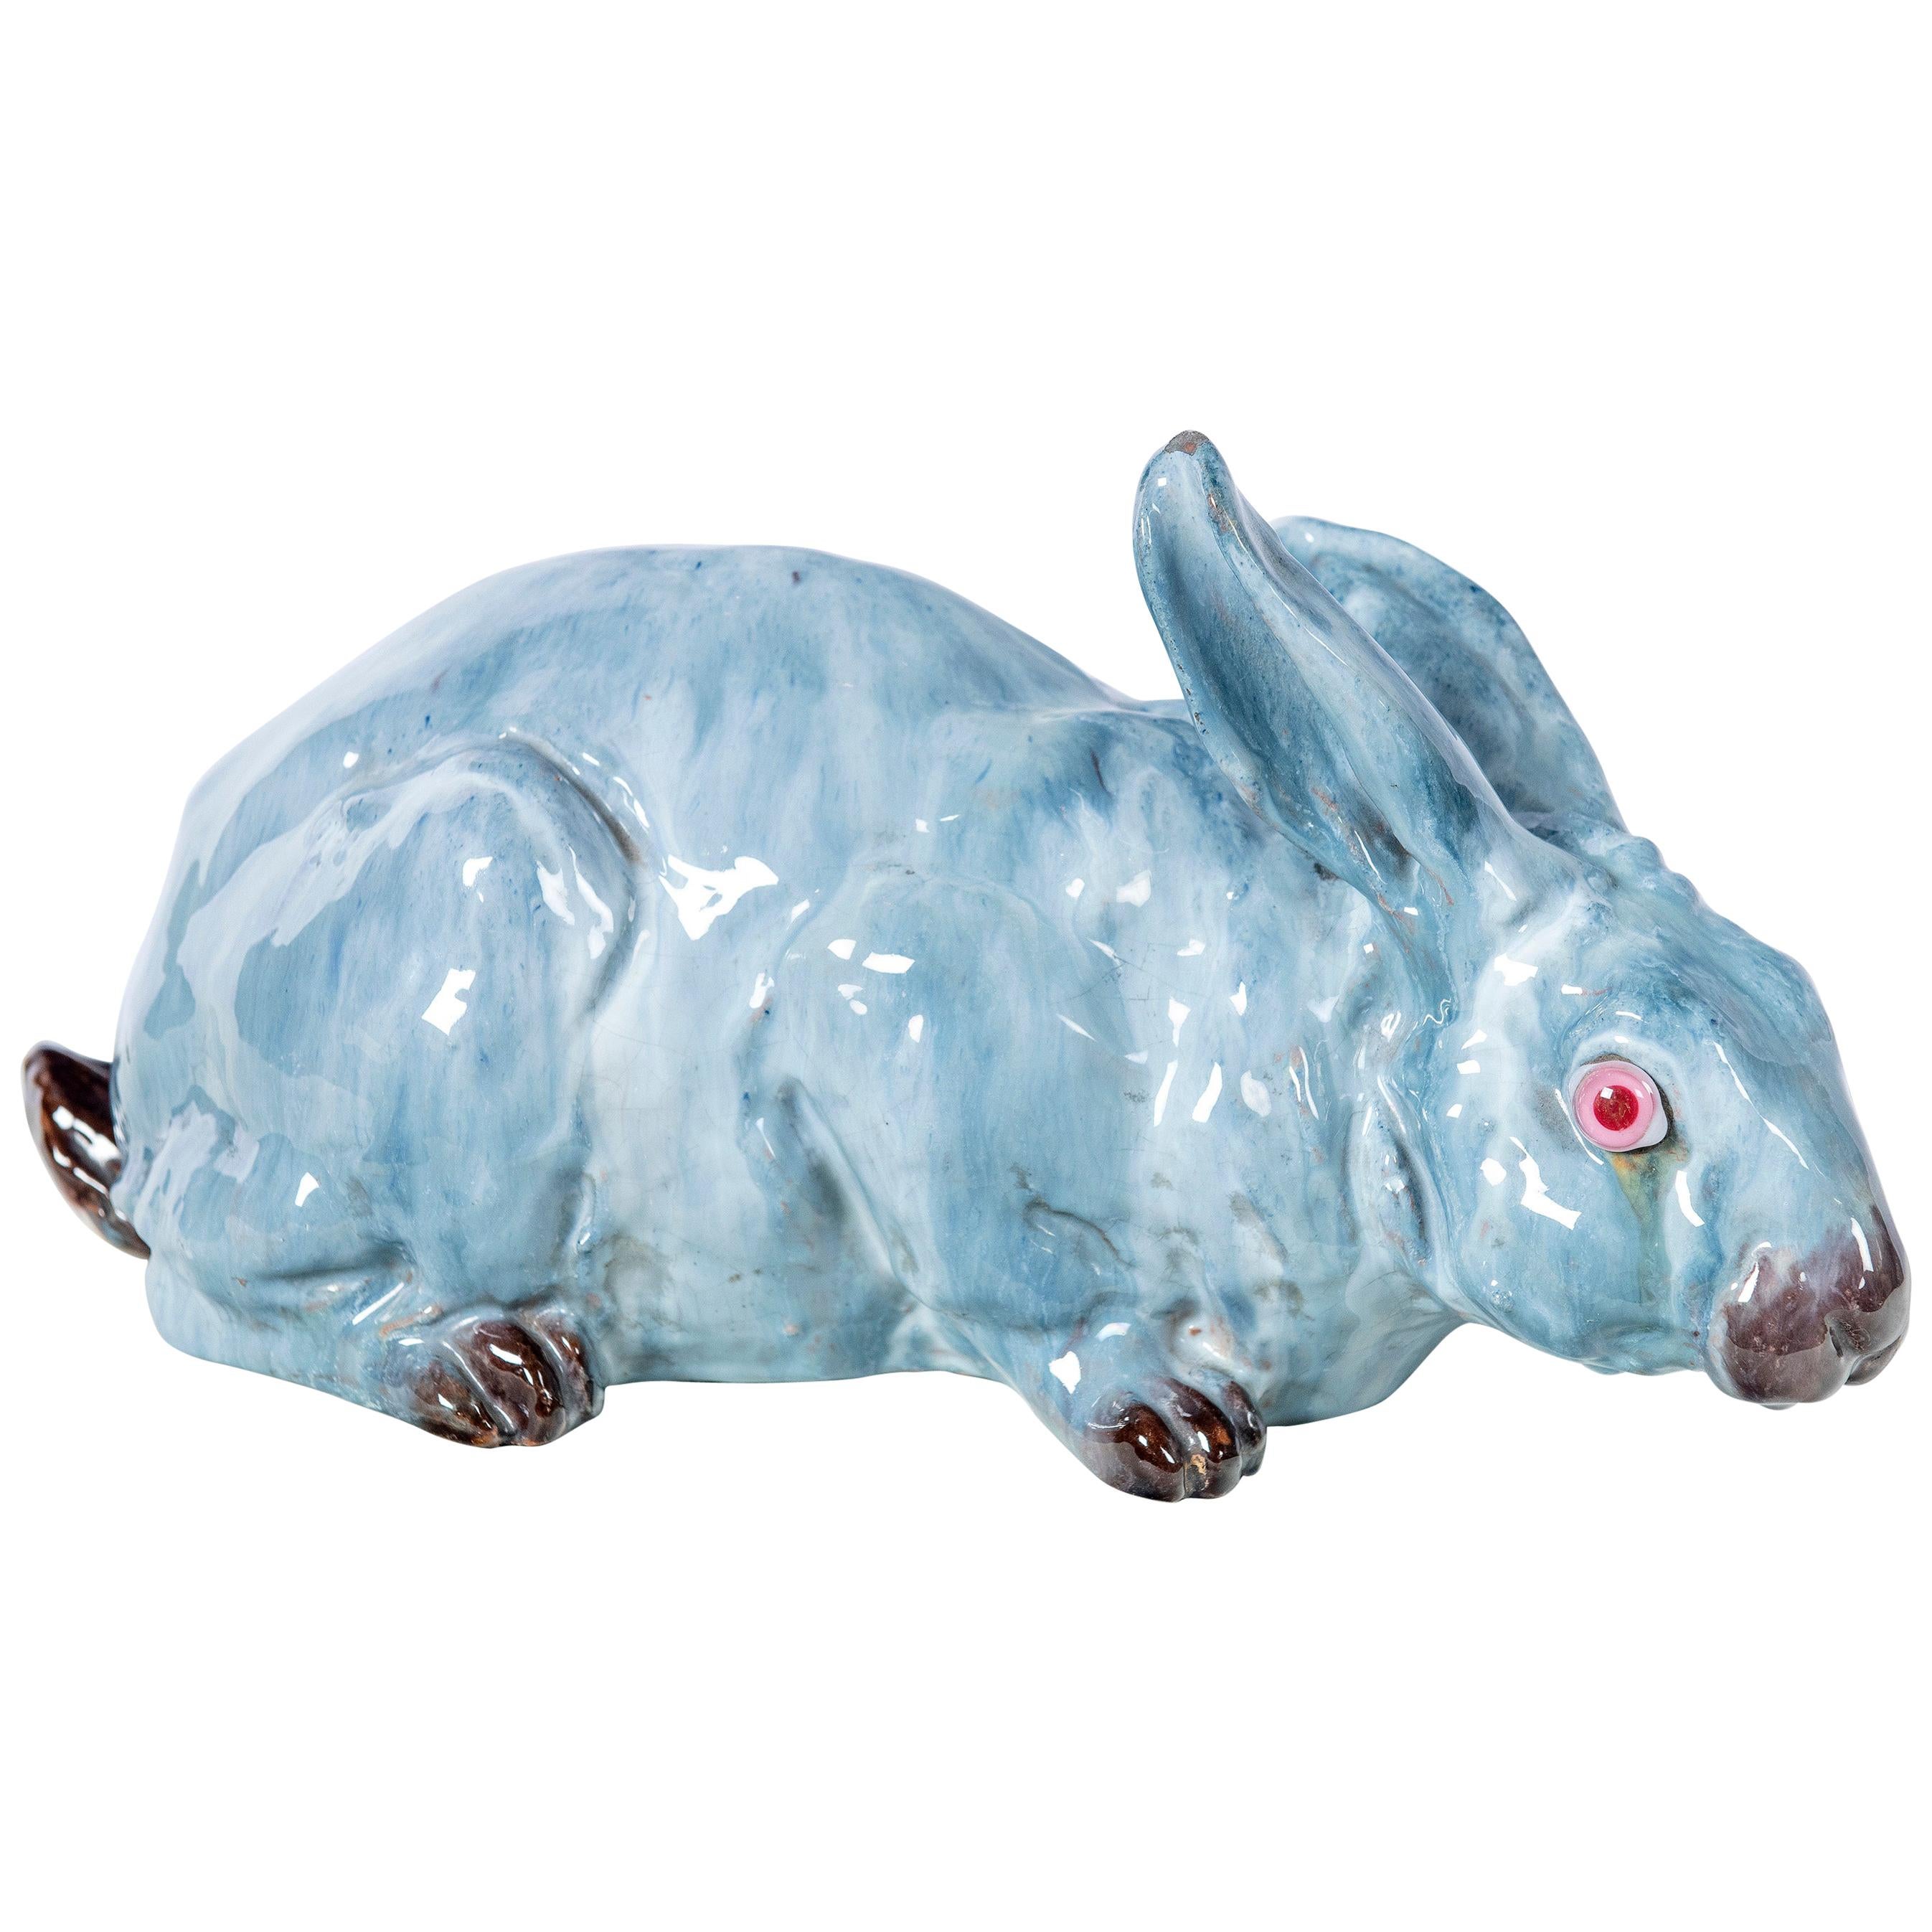 Glazed Ceramic Rabbit, France, Early 20th Century